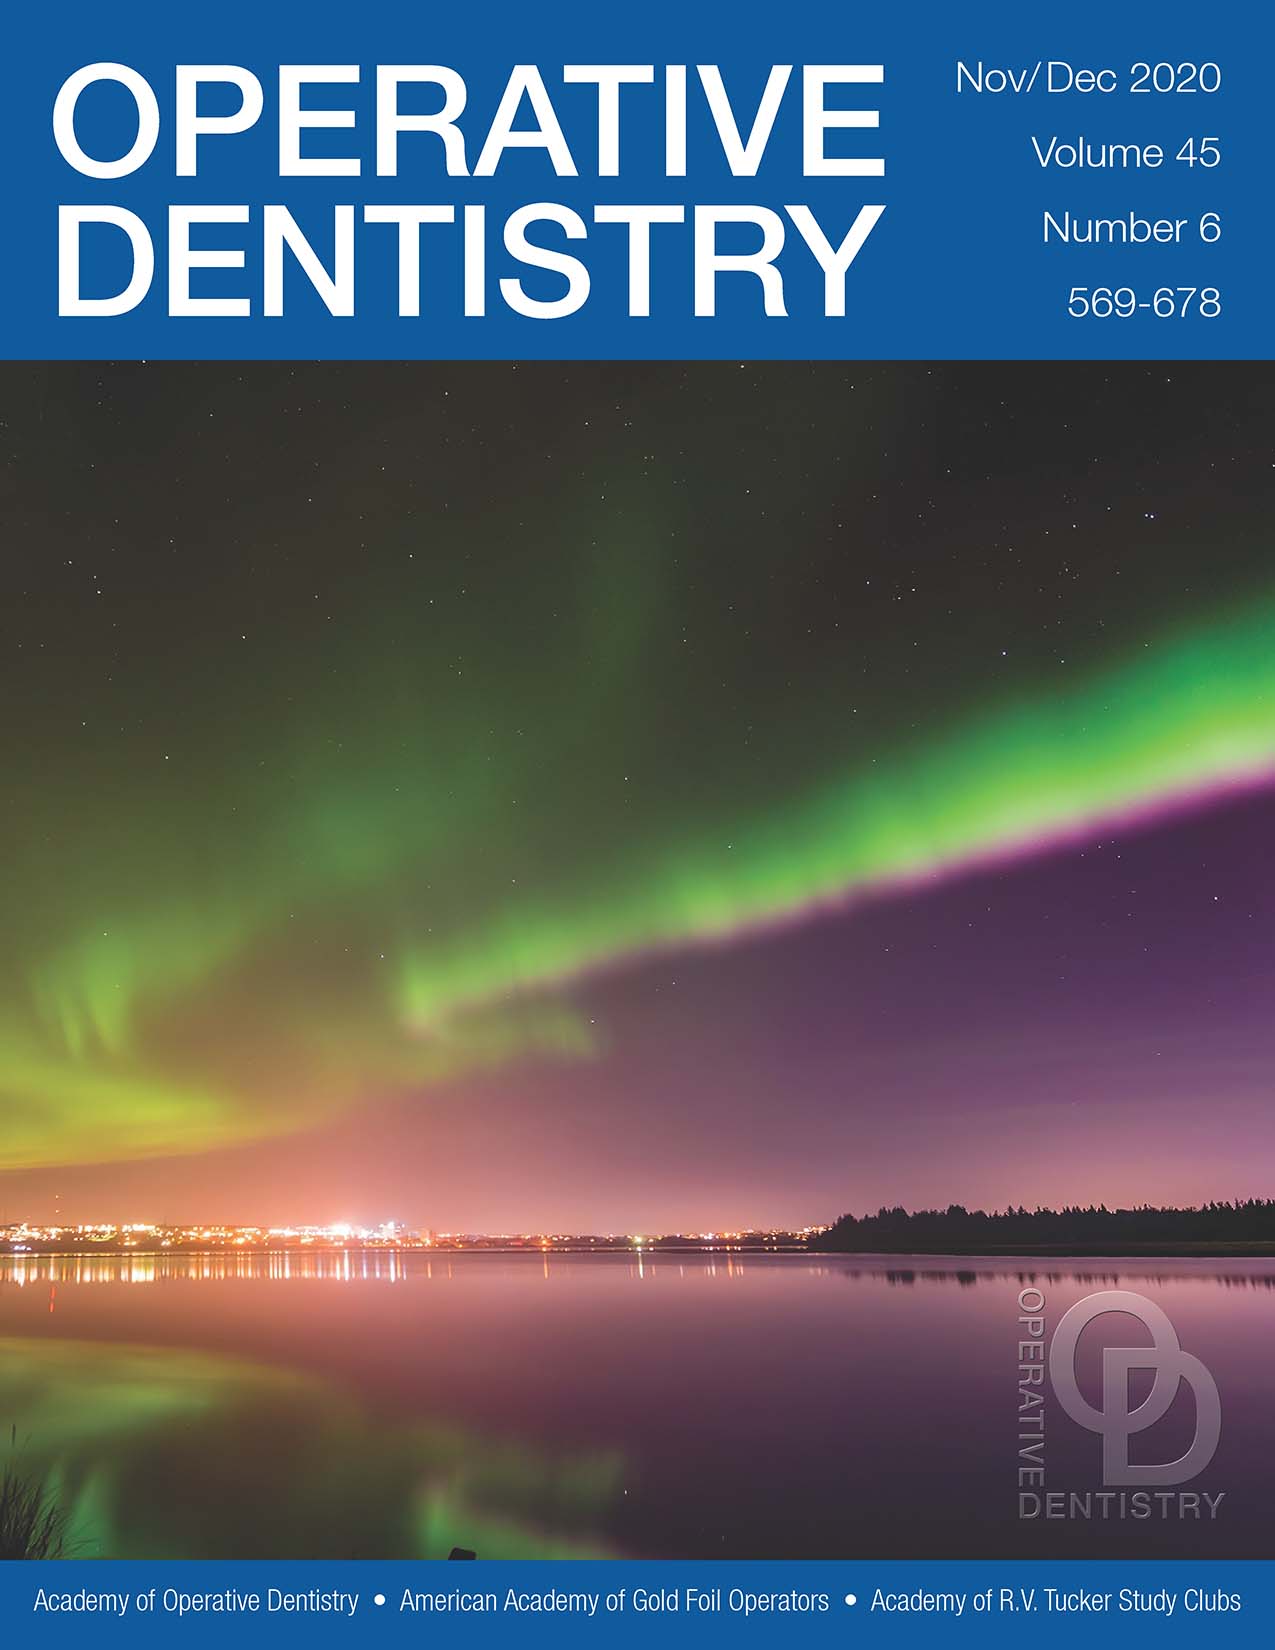 Dentistry Journal